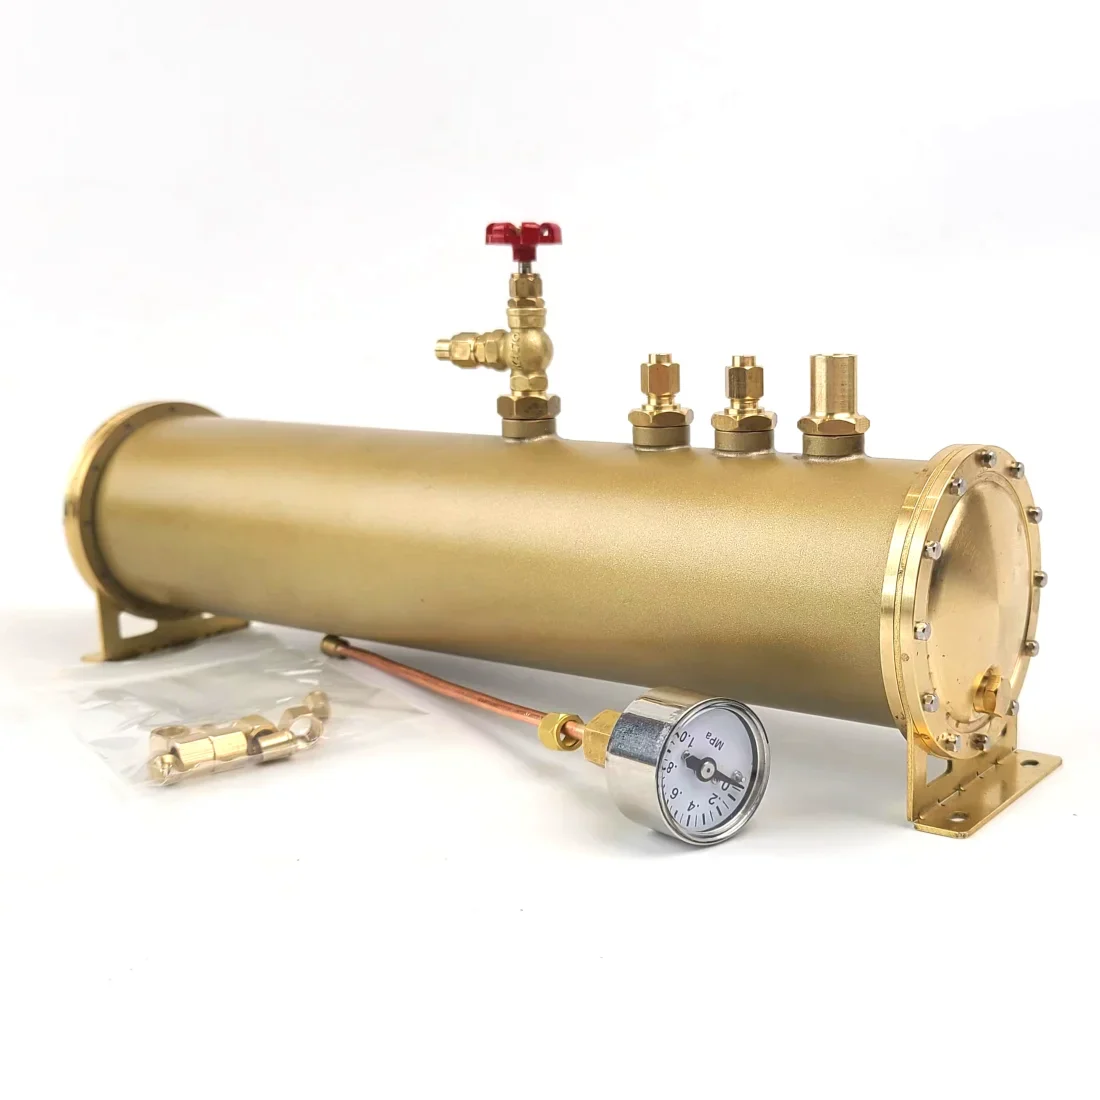 

KACIO Horizontal Steam Boiler Brass Metal Steam Boiler Suitable for Ship Model Experimental Toy